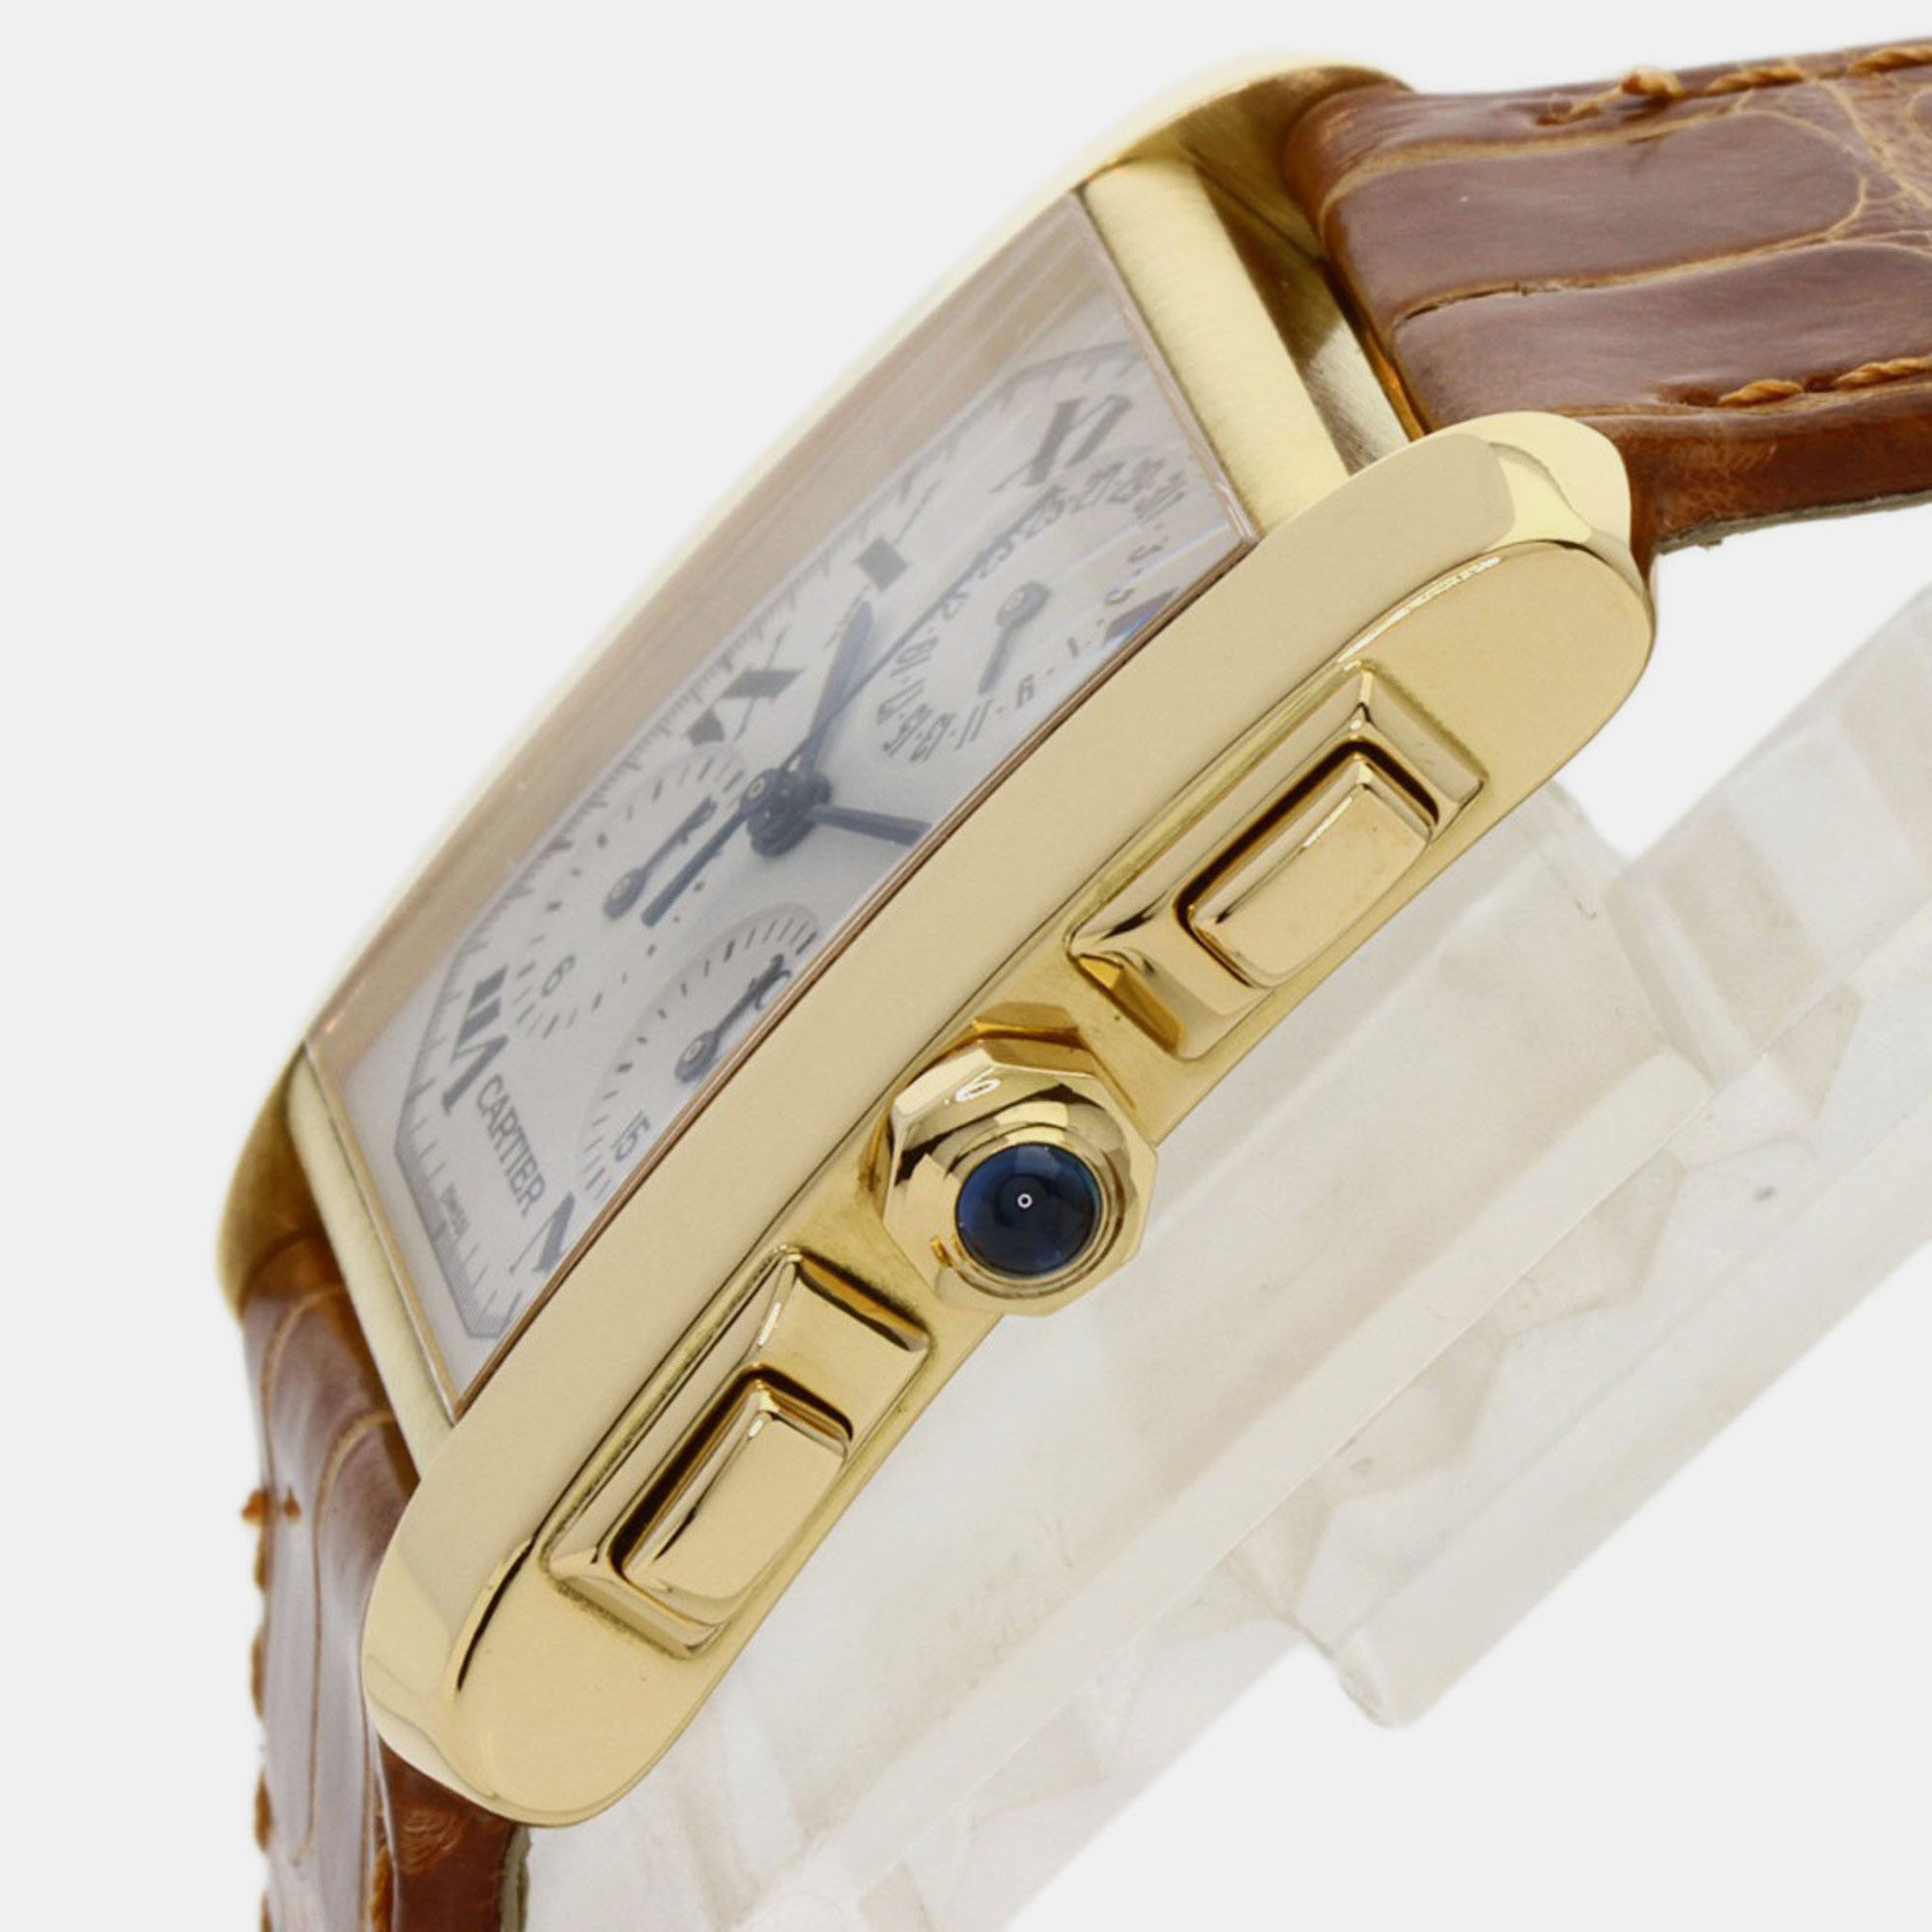 Cartier White 18k Yellow Gold Tank Francaise W5000556 Quartz Men's Wristwatch 28 Mm